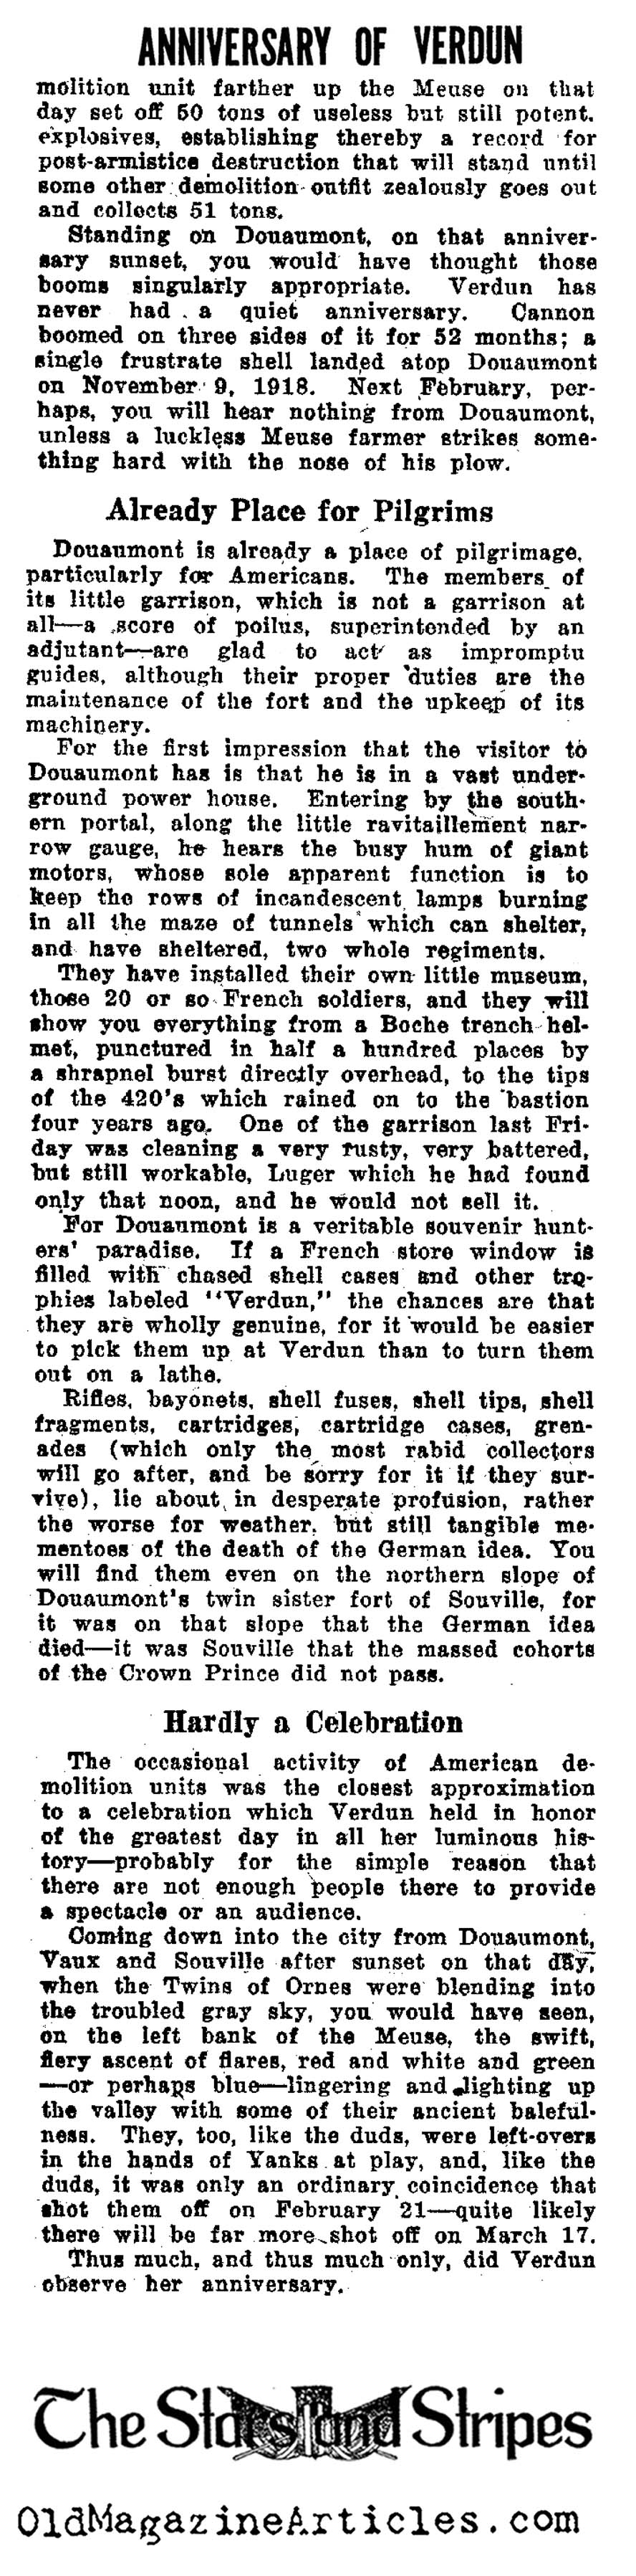 The Third Anniversary of Verdun (The Stars and Stripes, 1919)